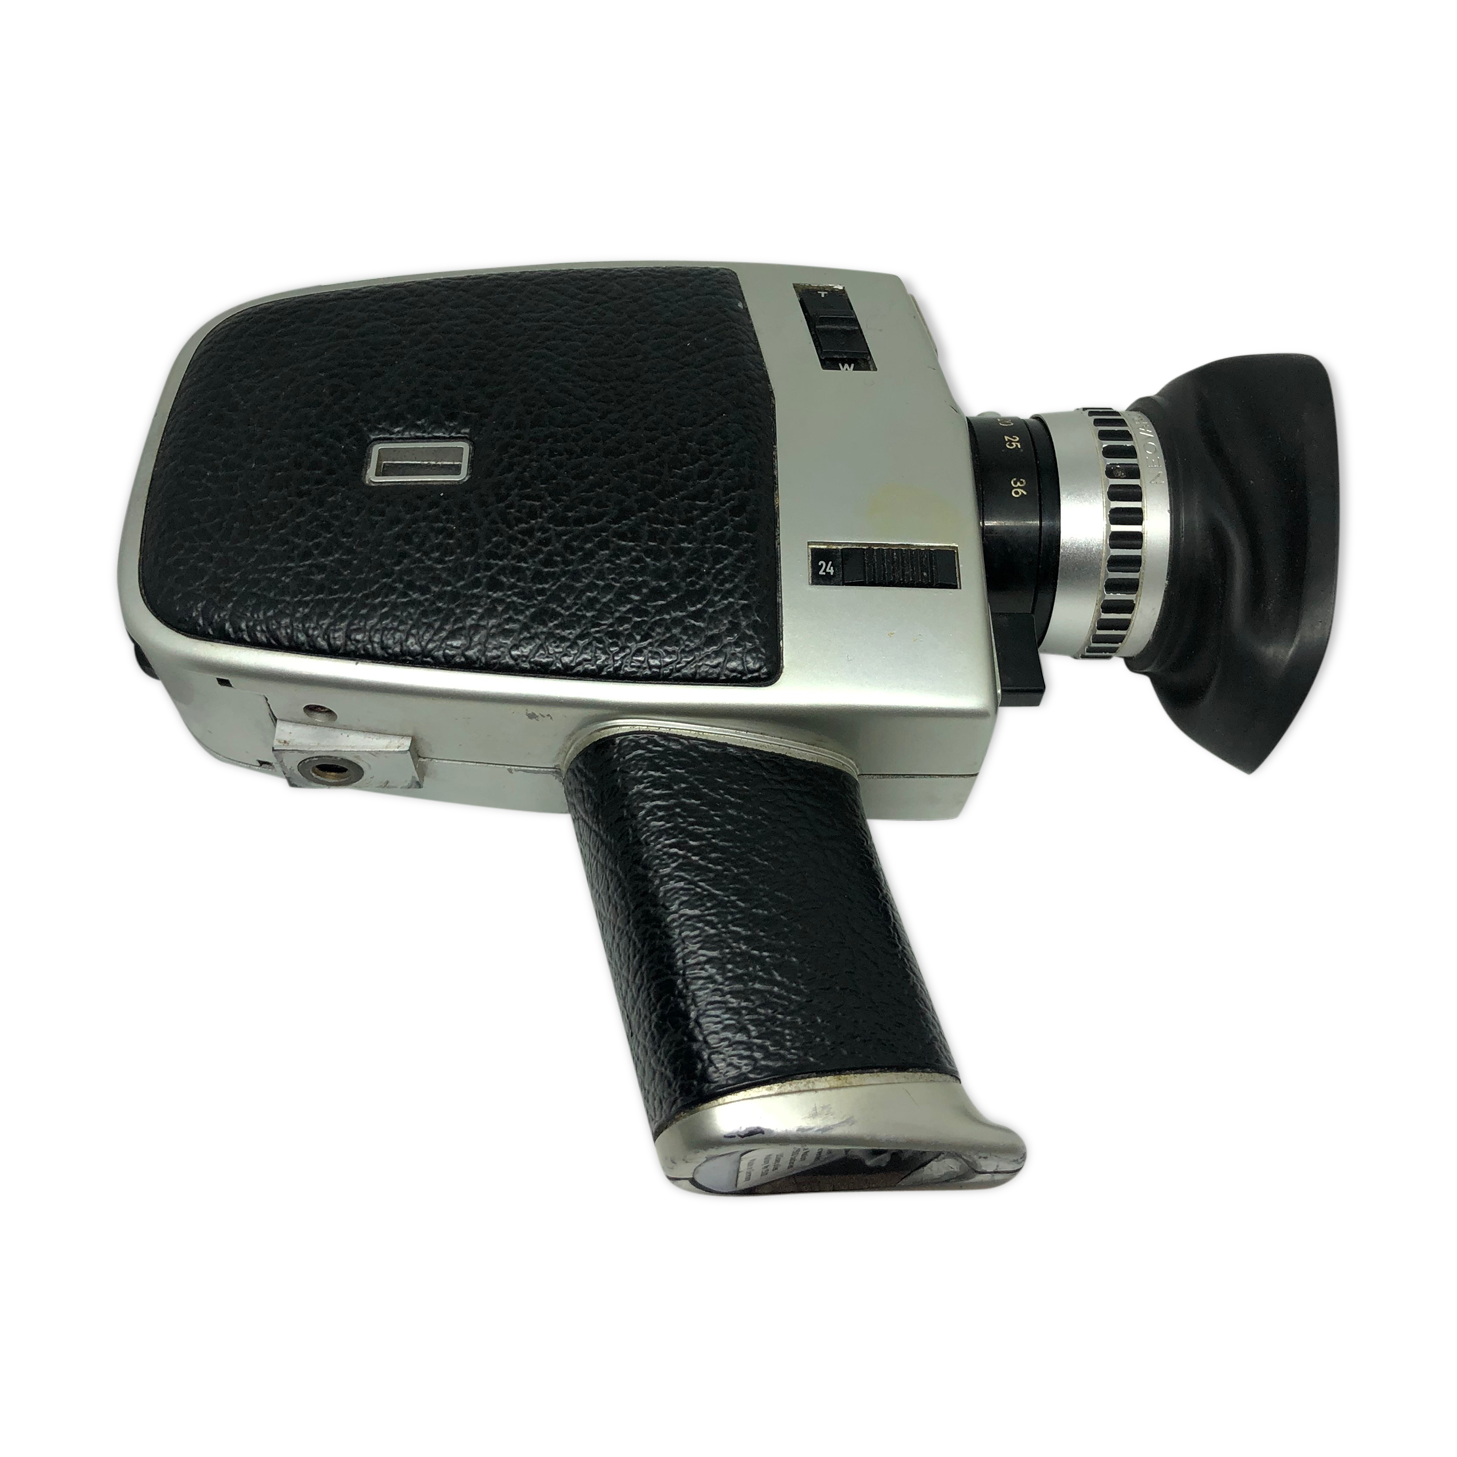 Bauer Camera super 8 mm BAUER  VINTAGE 